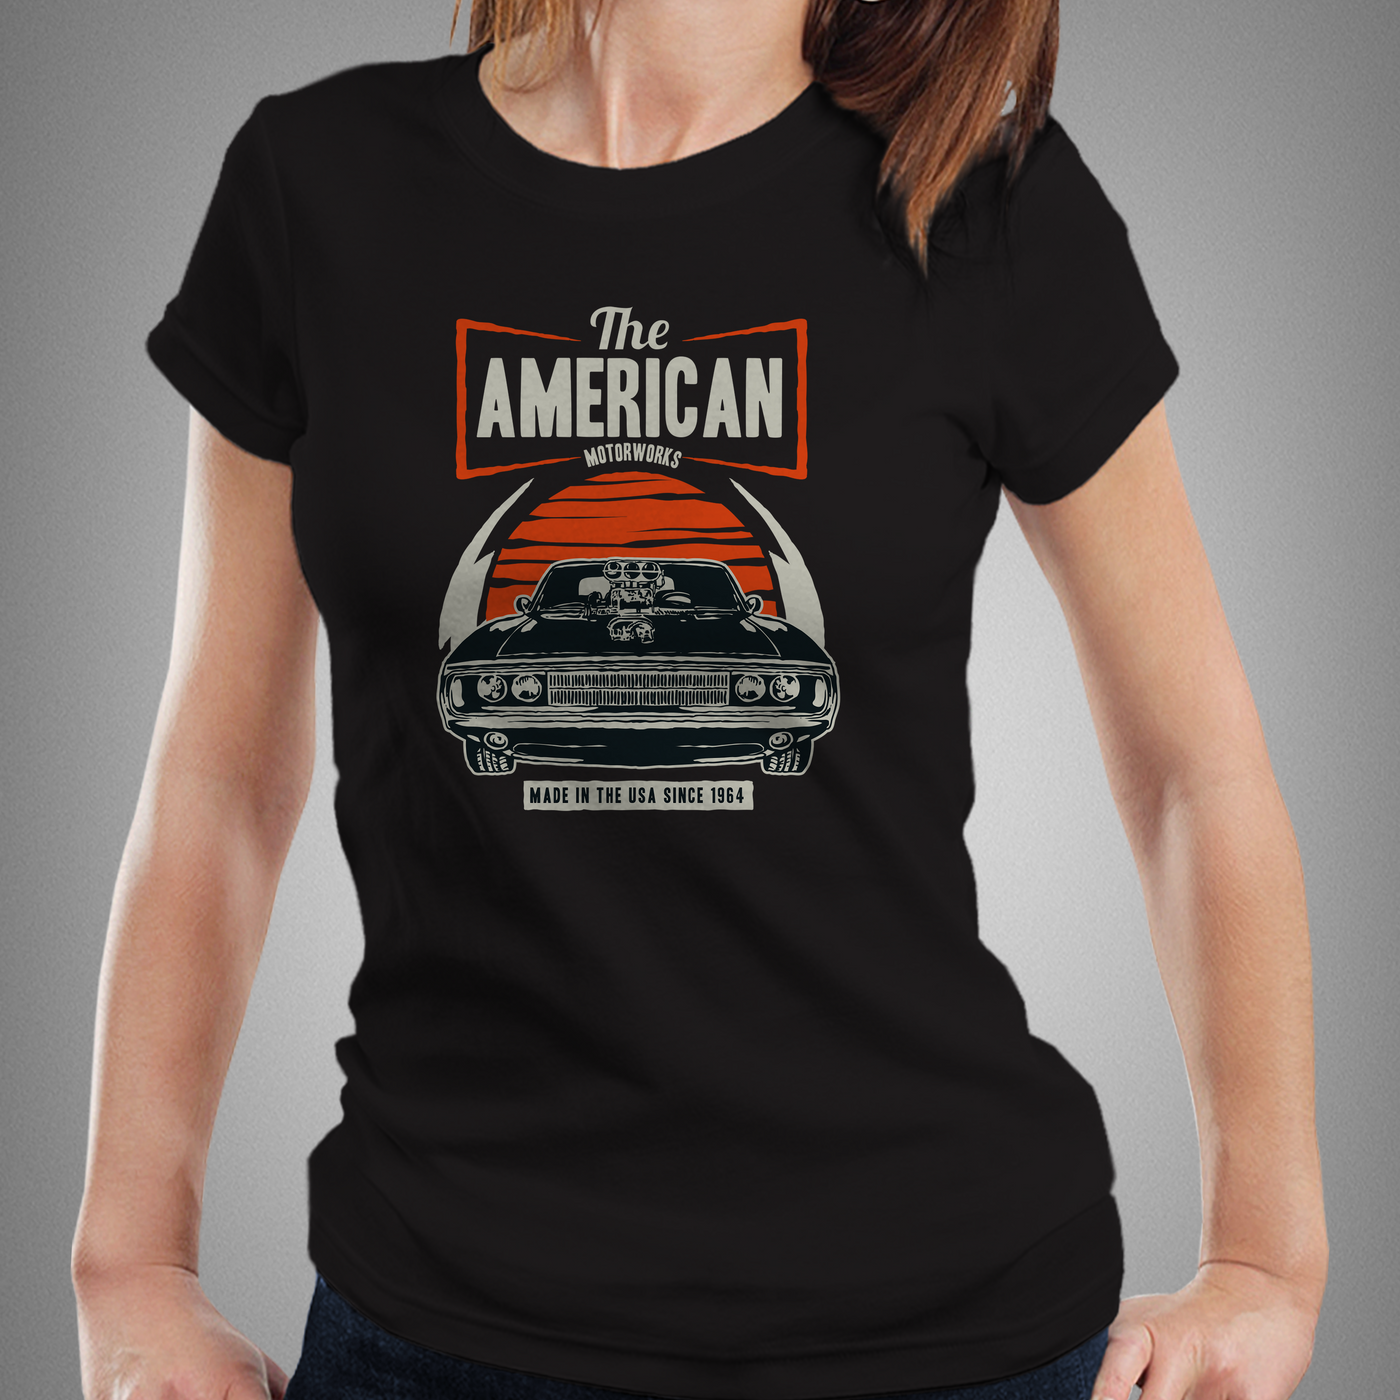 The American Motorworks - Fem